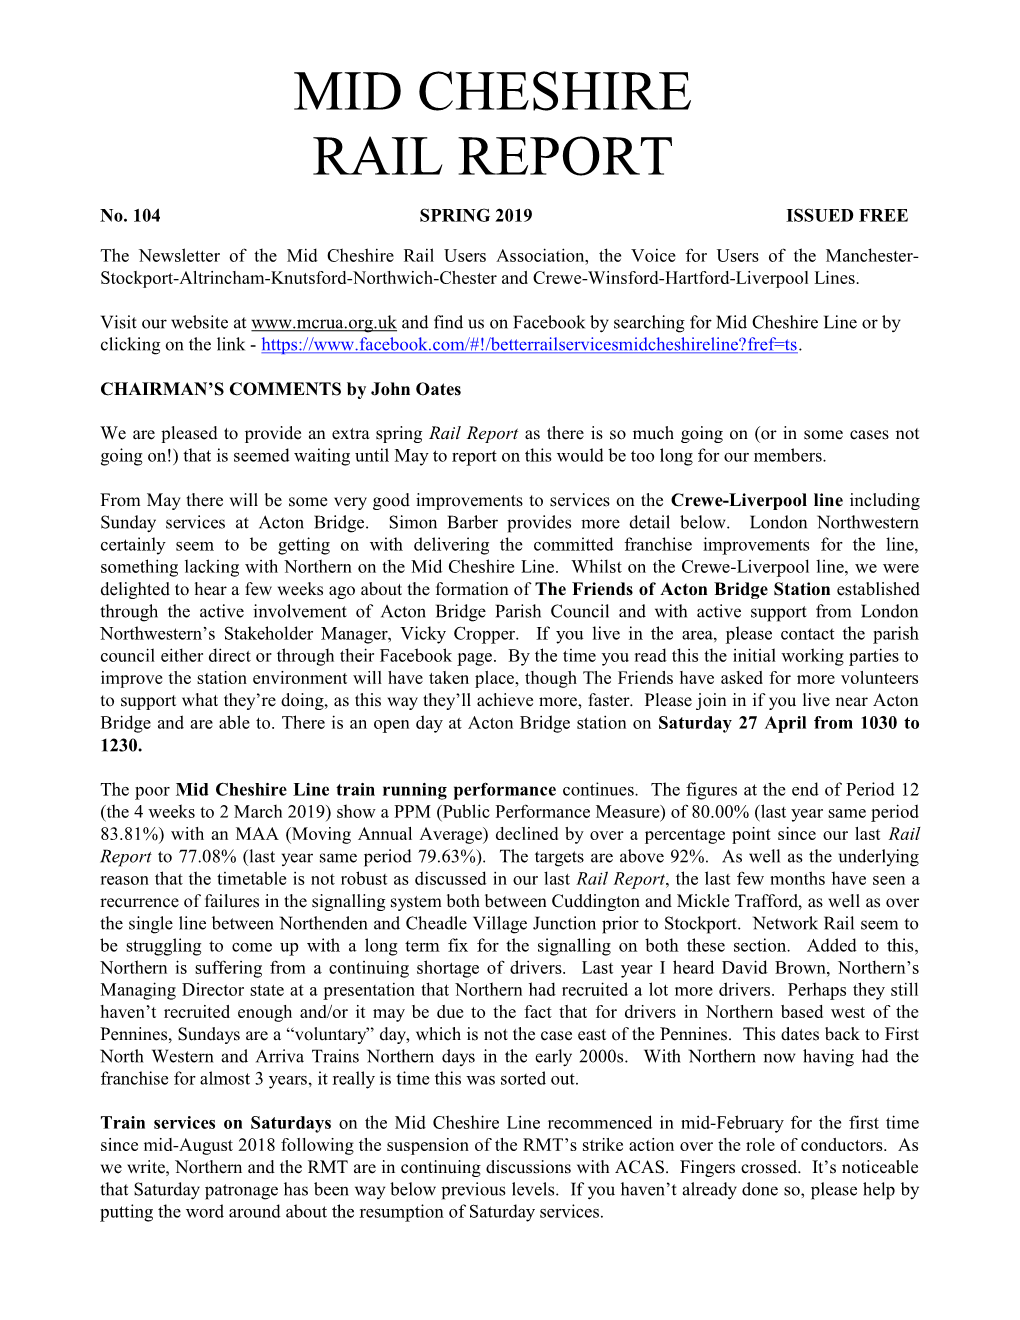 Mid Cheshire Rail Report Edition